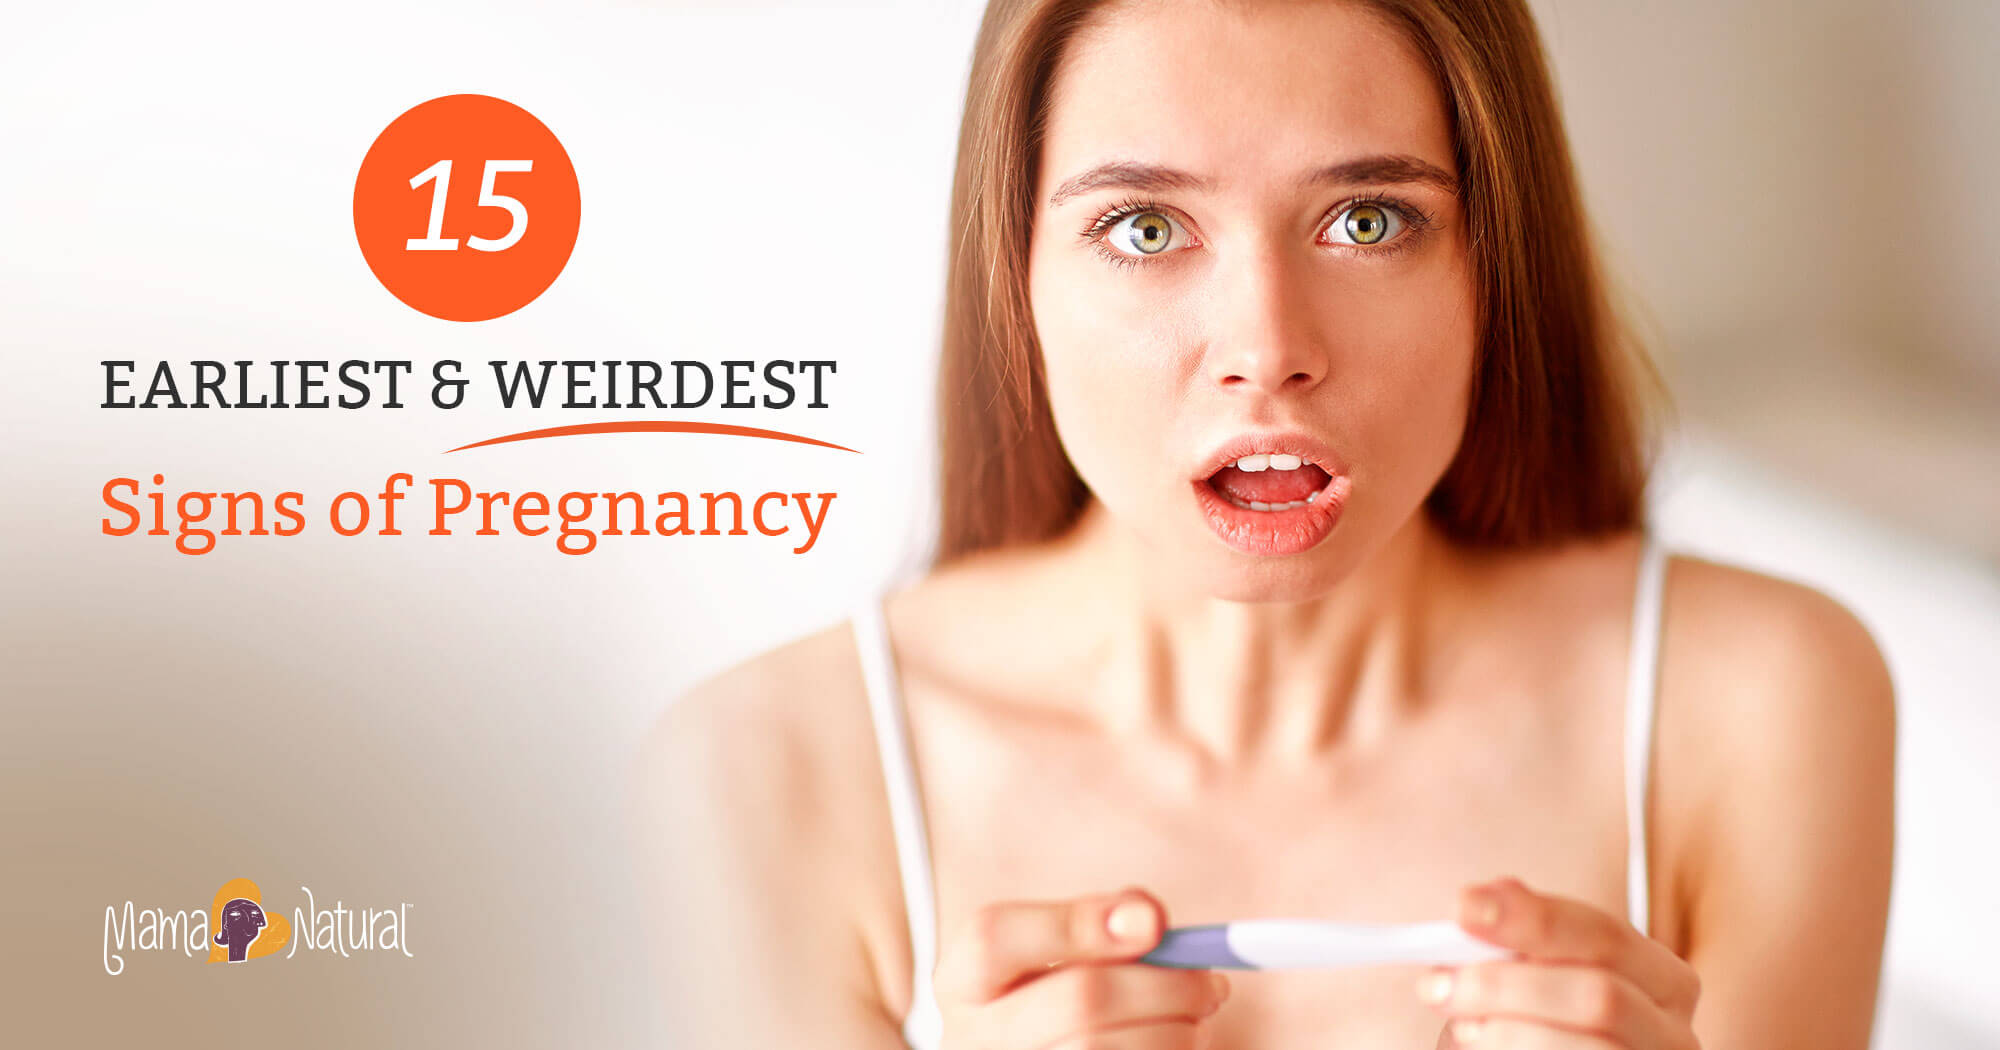 The very earliest pregnancy symptoms